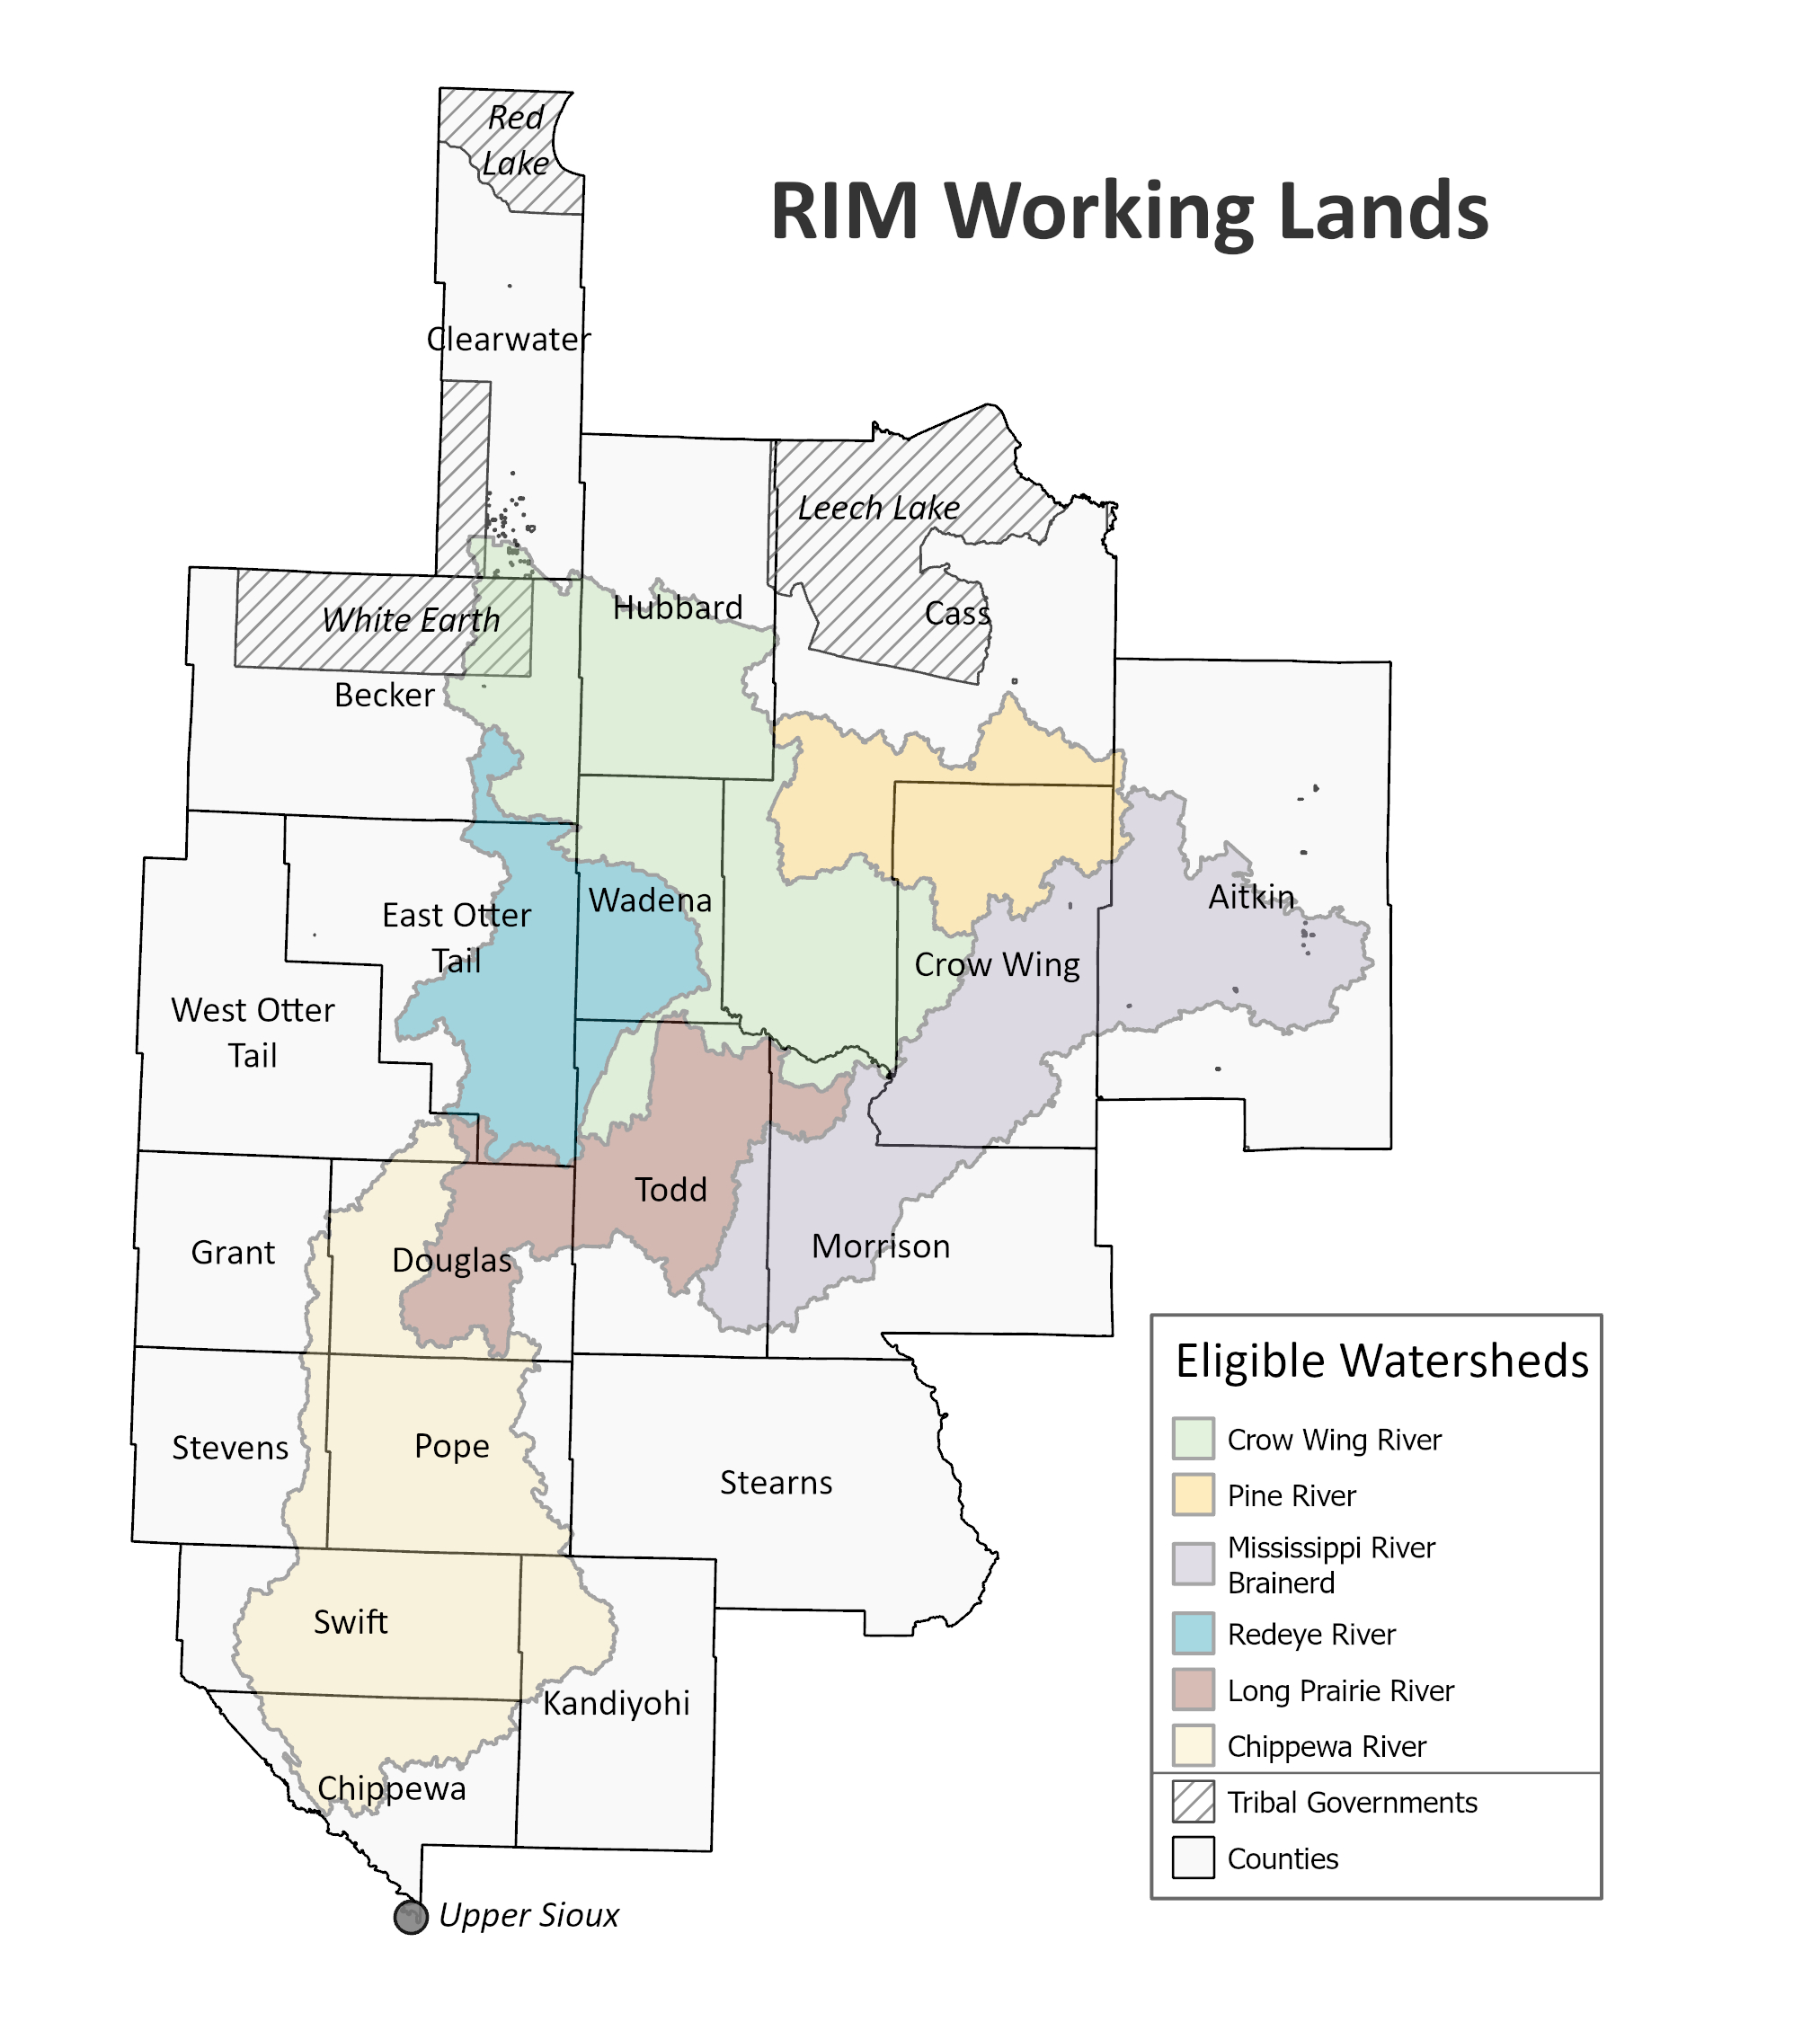 RIM Working Lands easement program eligible area